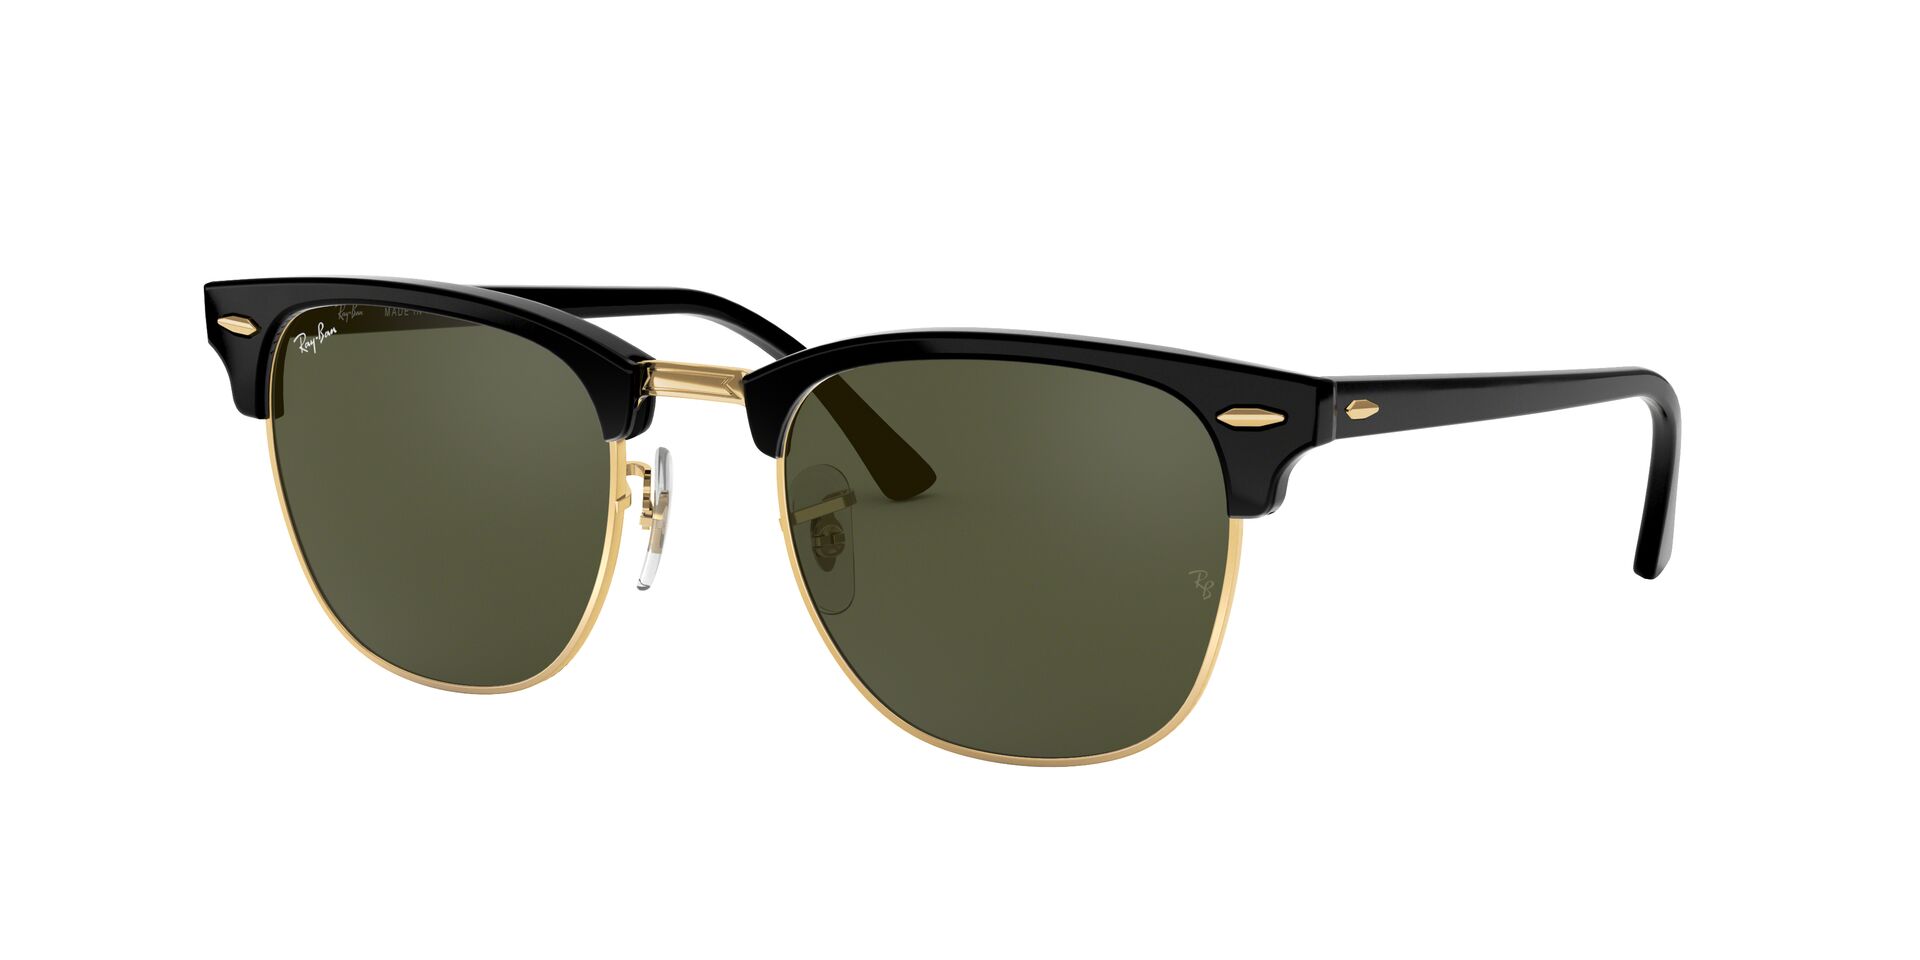 Ray-Ban Clubmaster RB3016 Sunglasses | Fashion Eyewear